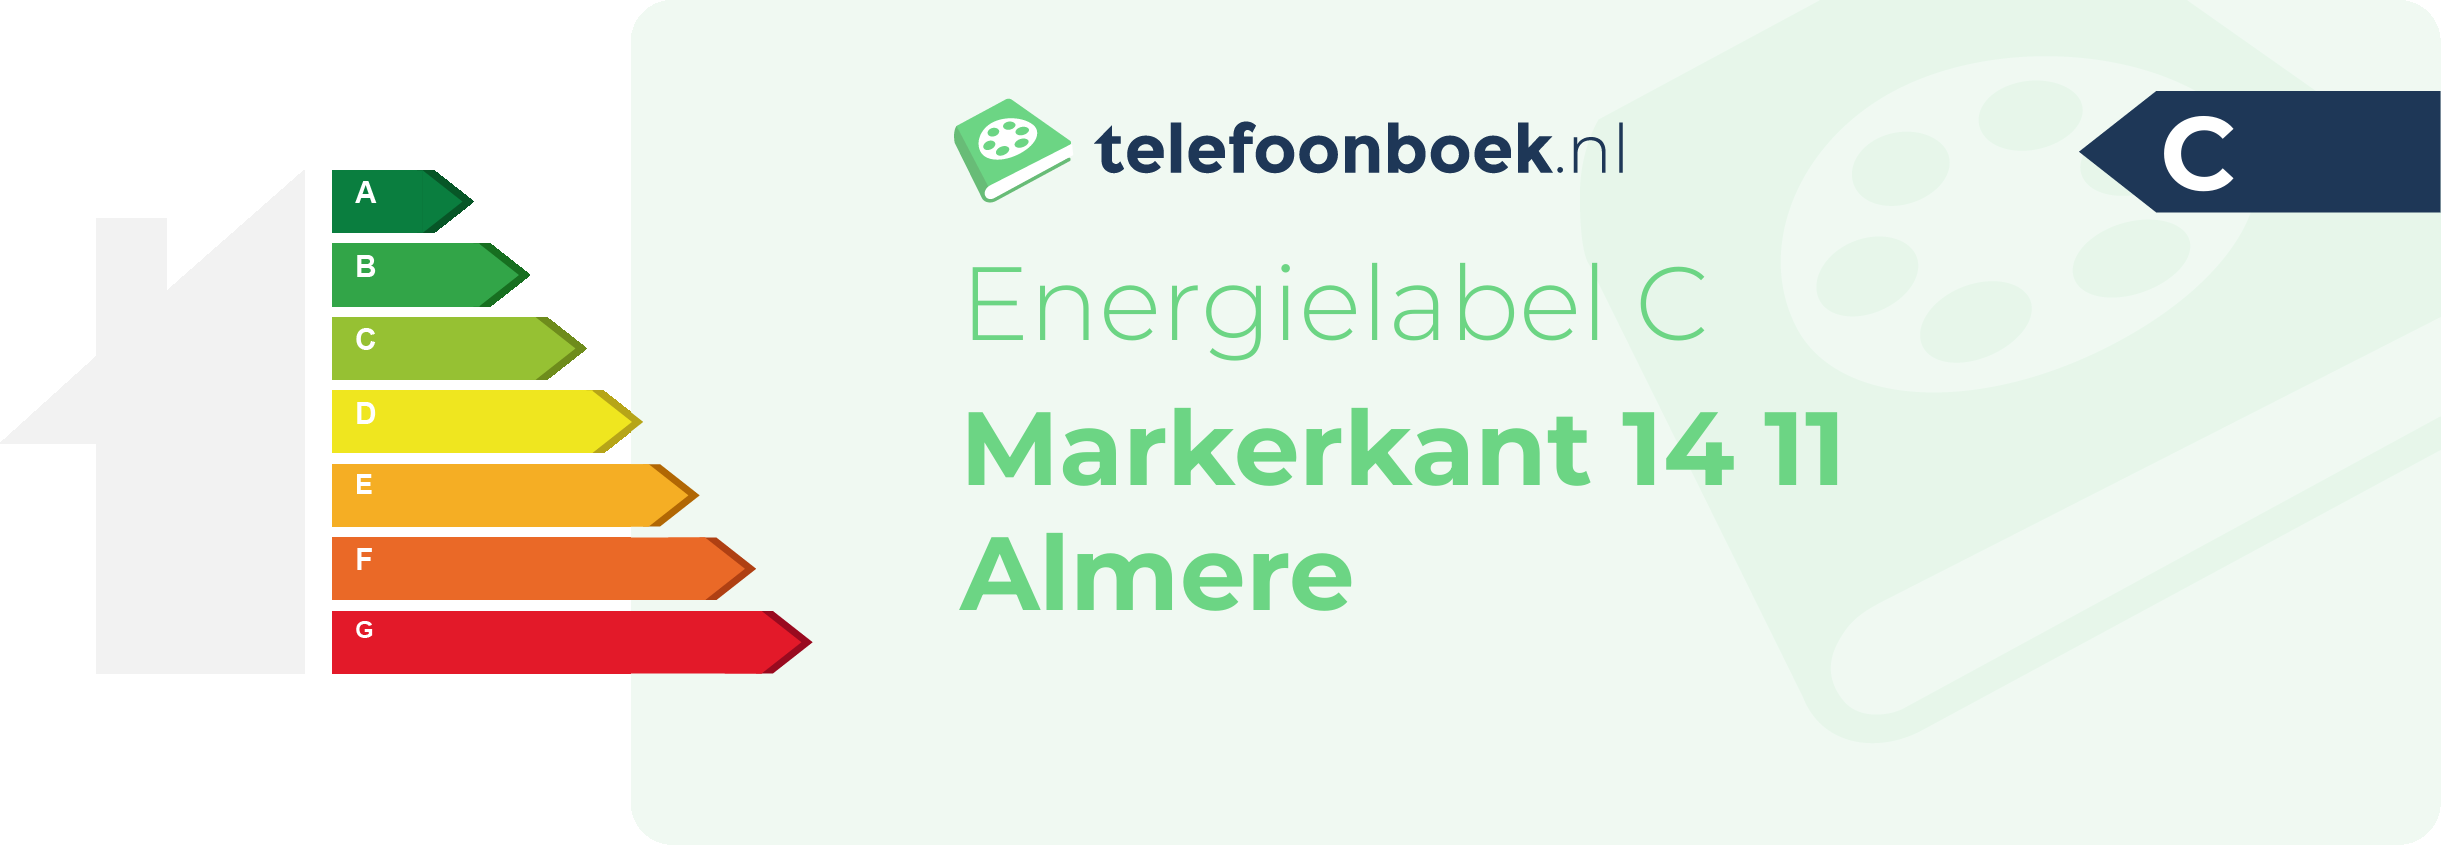 Energielabel Markerkant 14 11 Almere